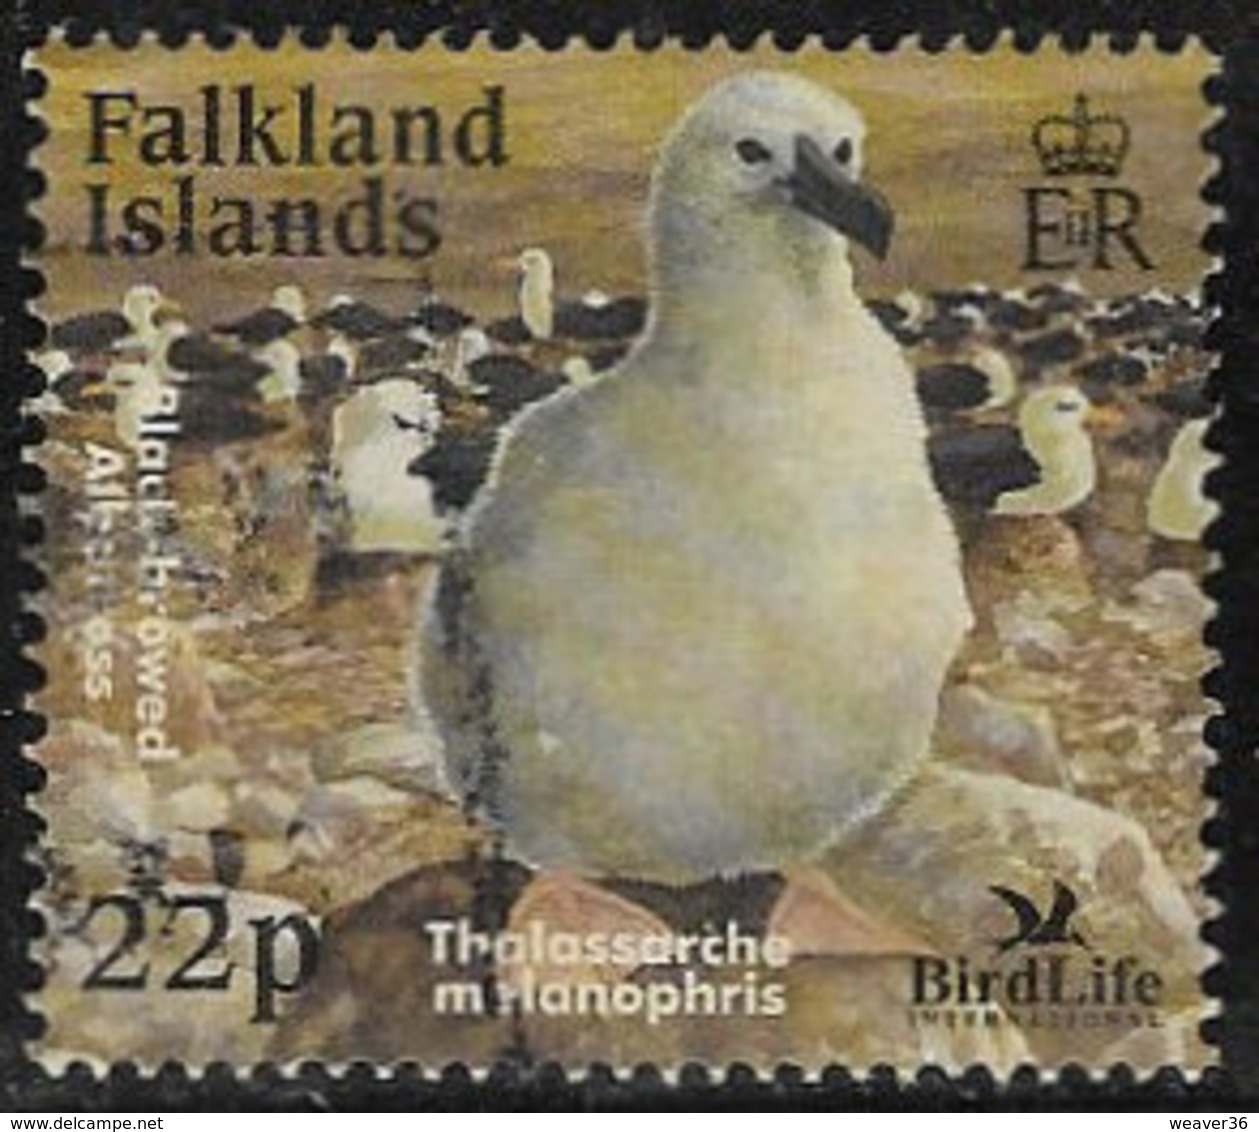 Falkland Islands SG968 2003 Bird Life International 22p Good/fine Used [40/32642/4D] - Falkland Islands